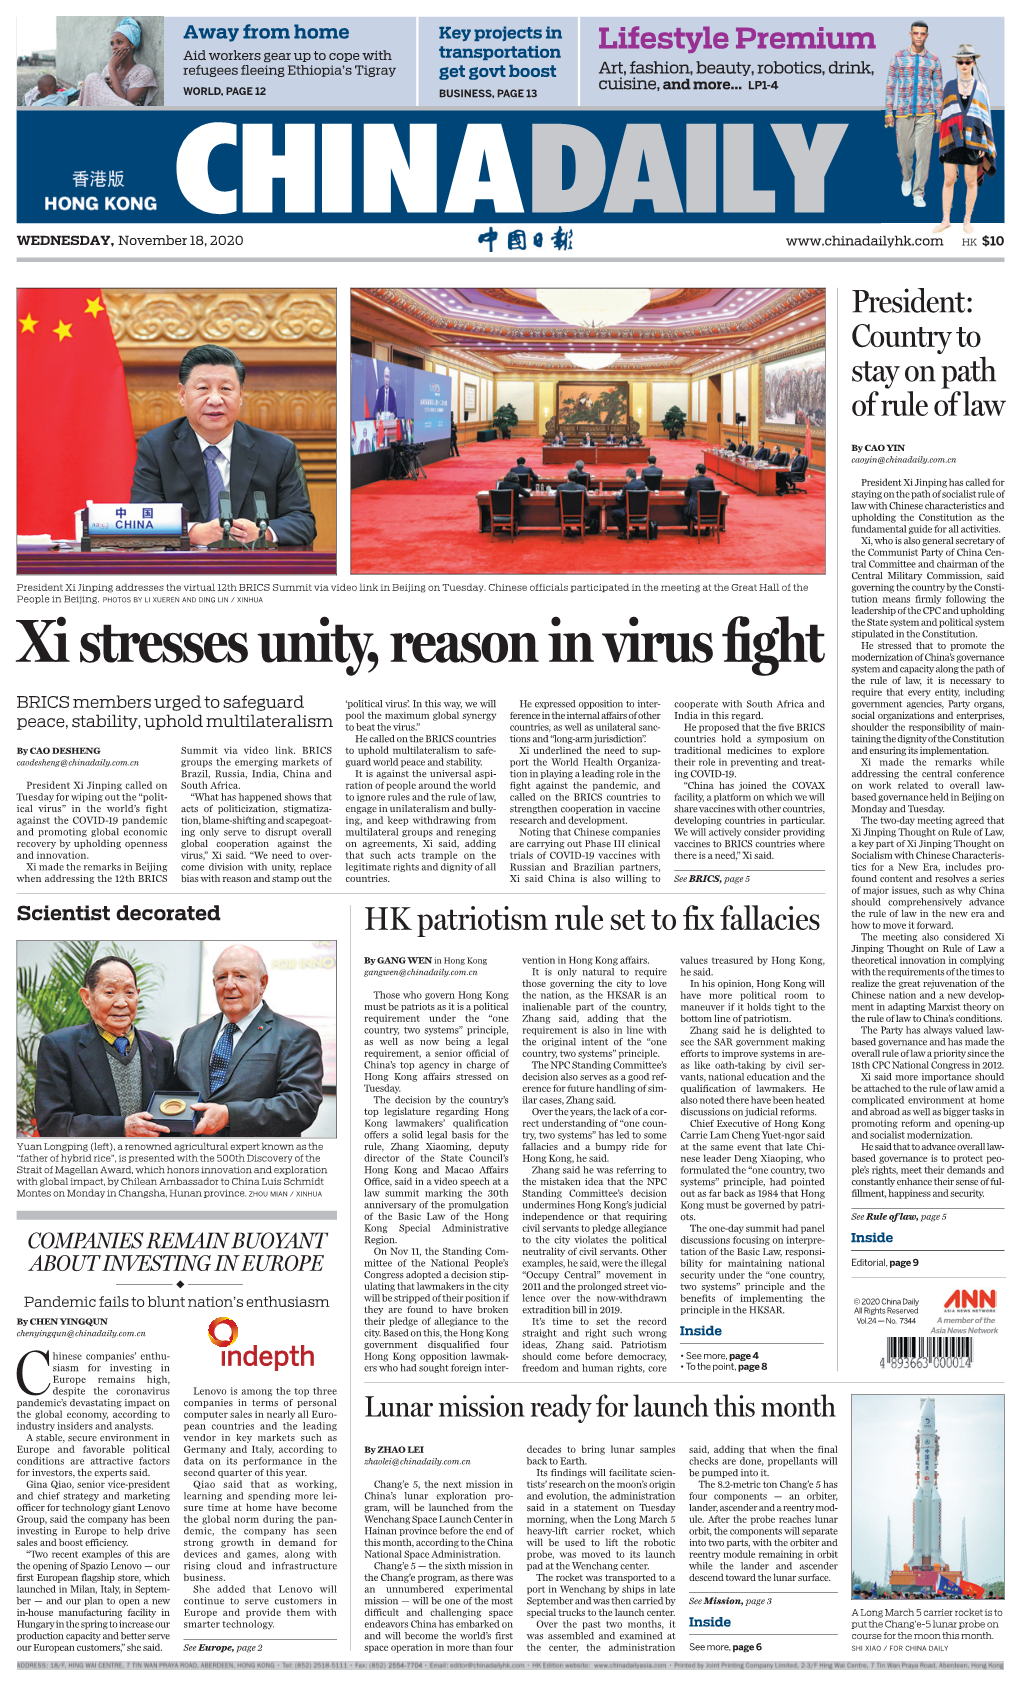 Xi Stresses Unity, Reason in Virus Fight